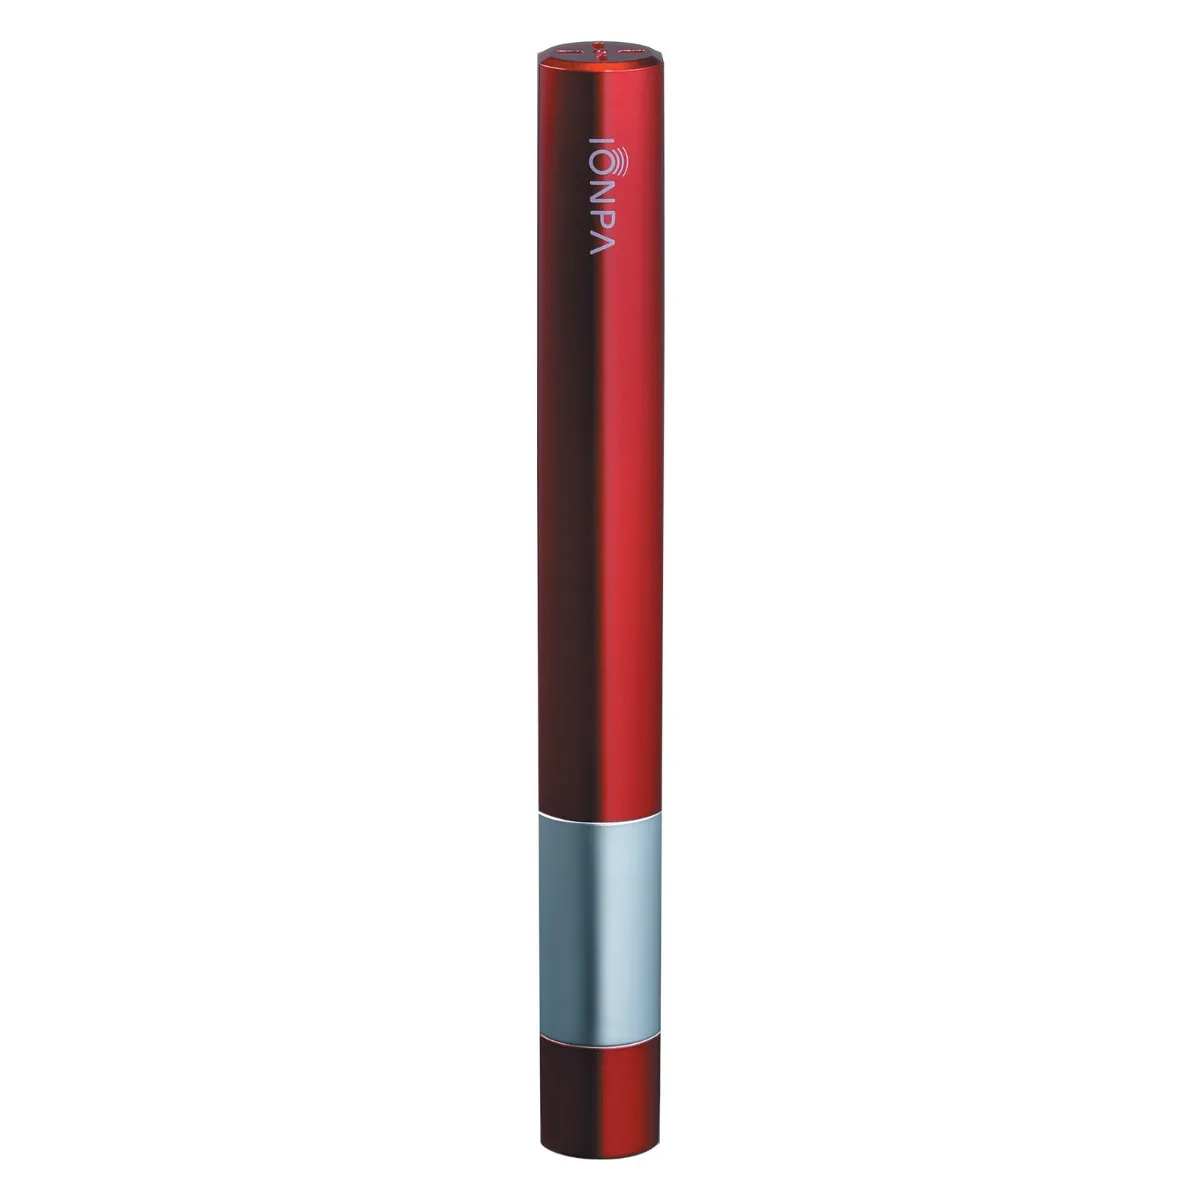 Sonická-ionizačná zubná kefka IONICKISS IONPA TRAVEL kompaktná, červená 1×1 ks, sonická zubná kefka